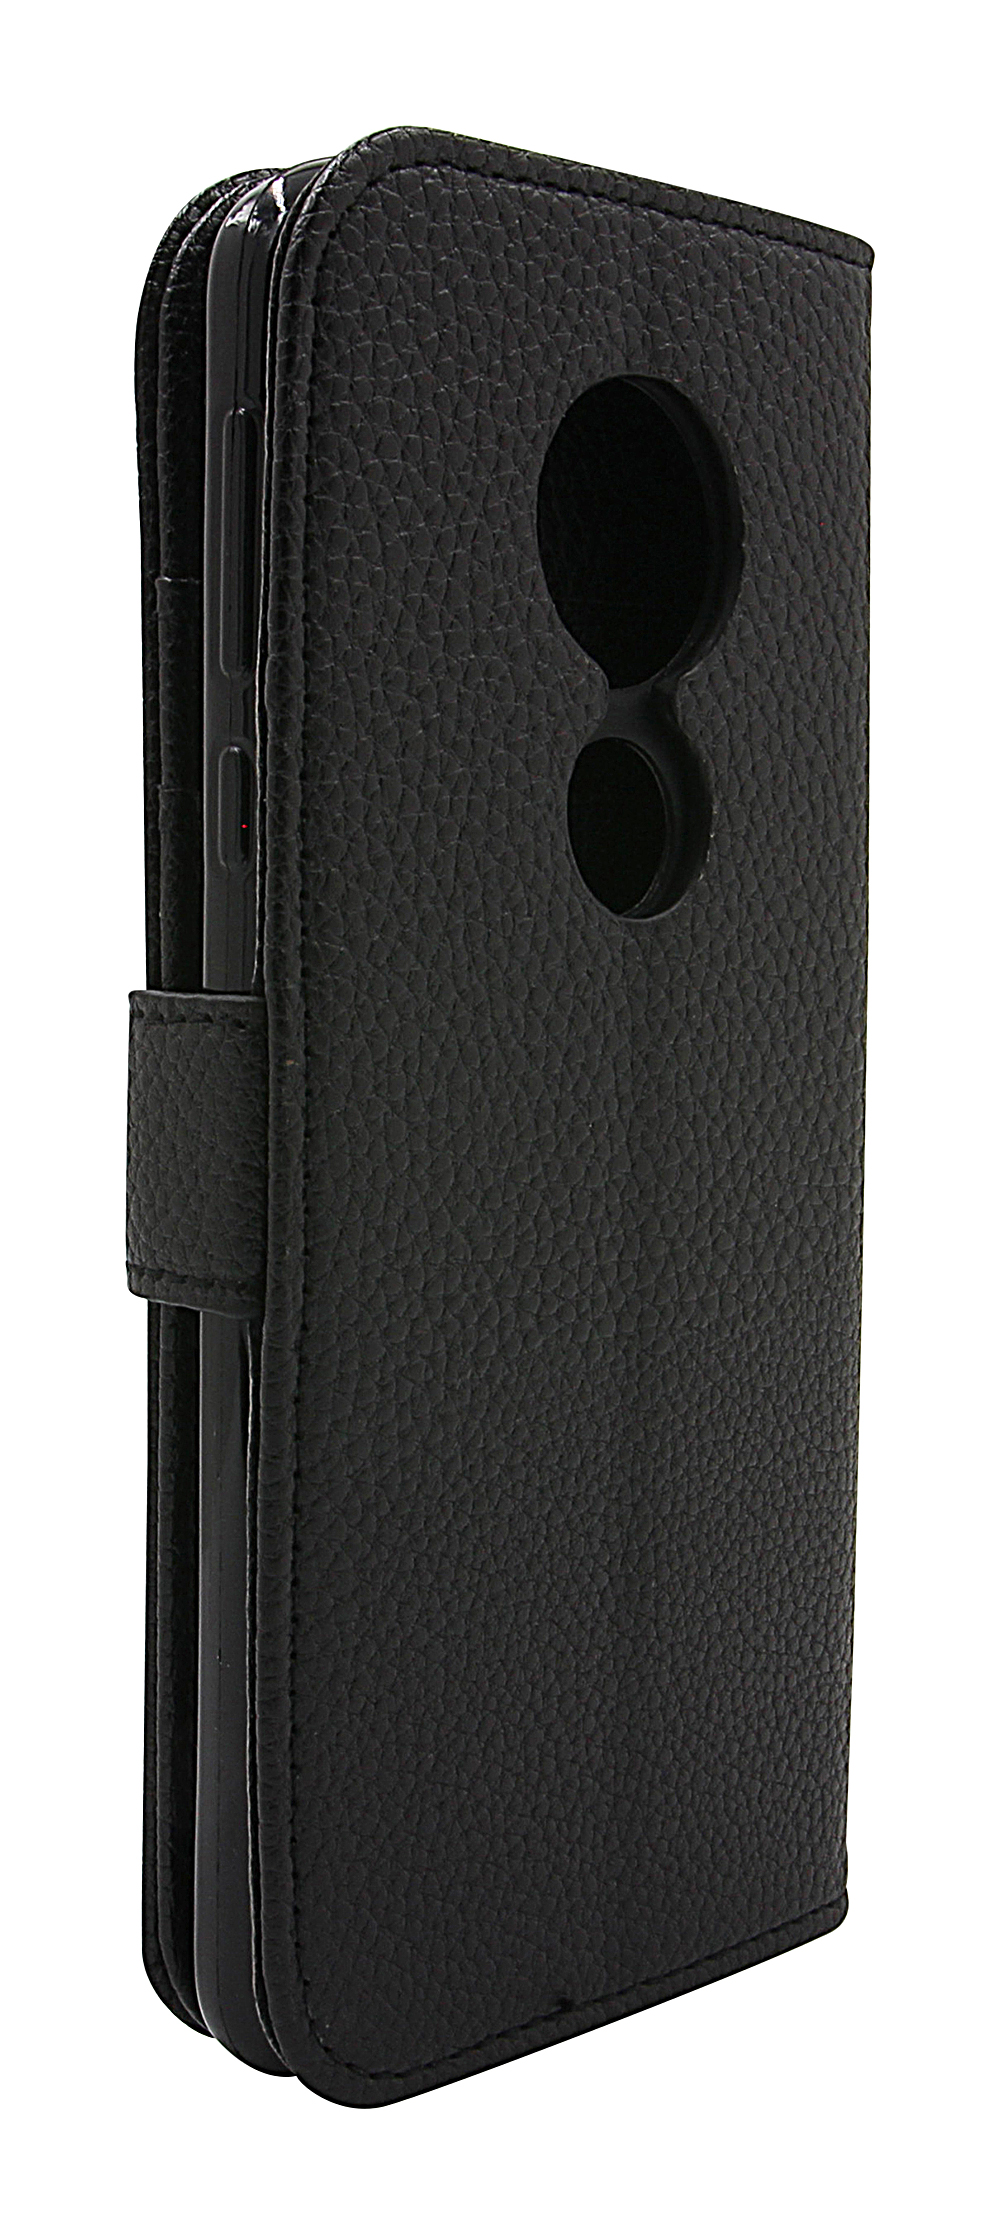 New Standcase Wallet Motorola Moto G6 Play